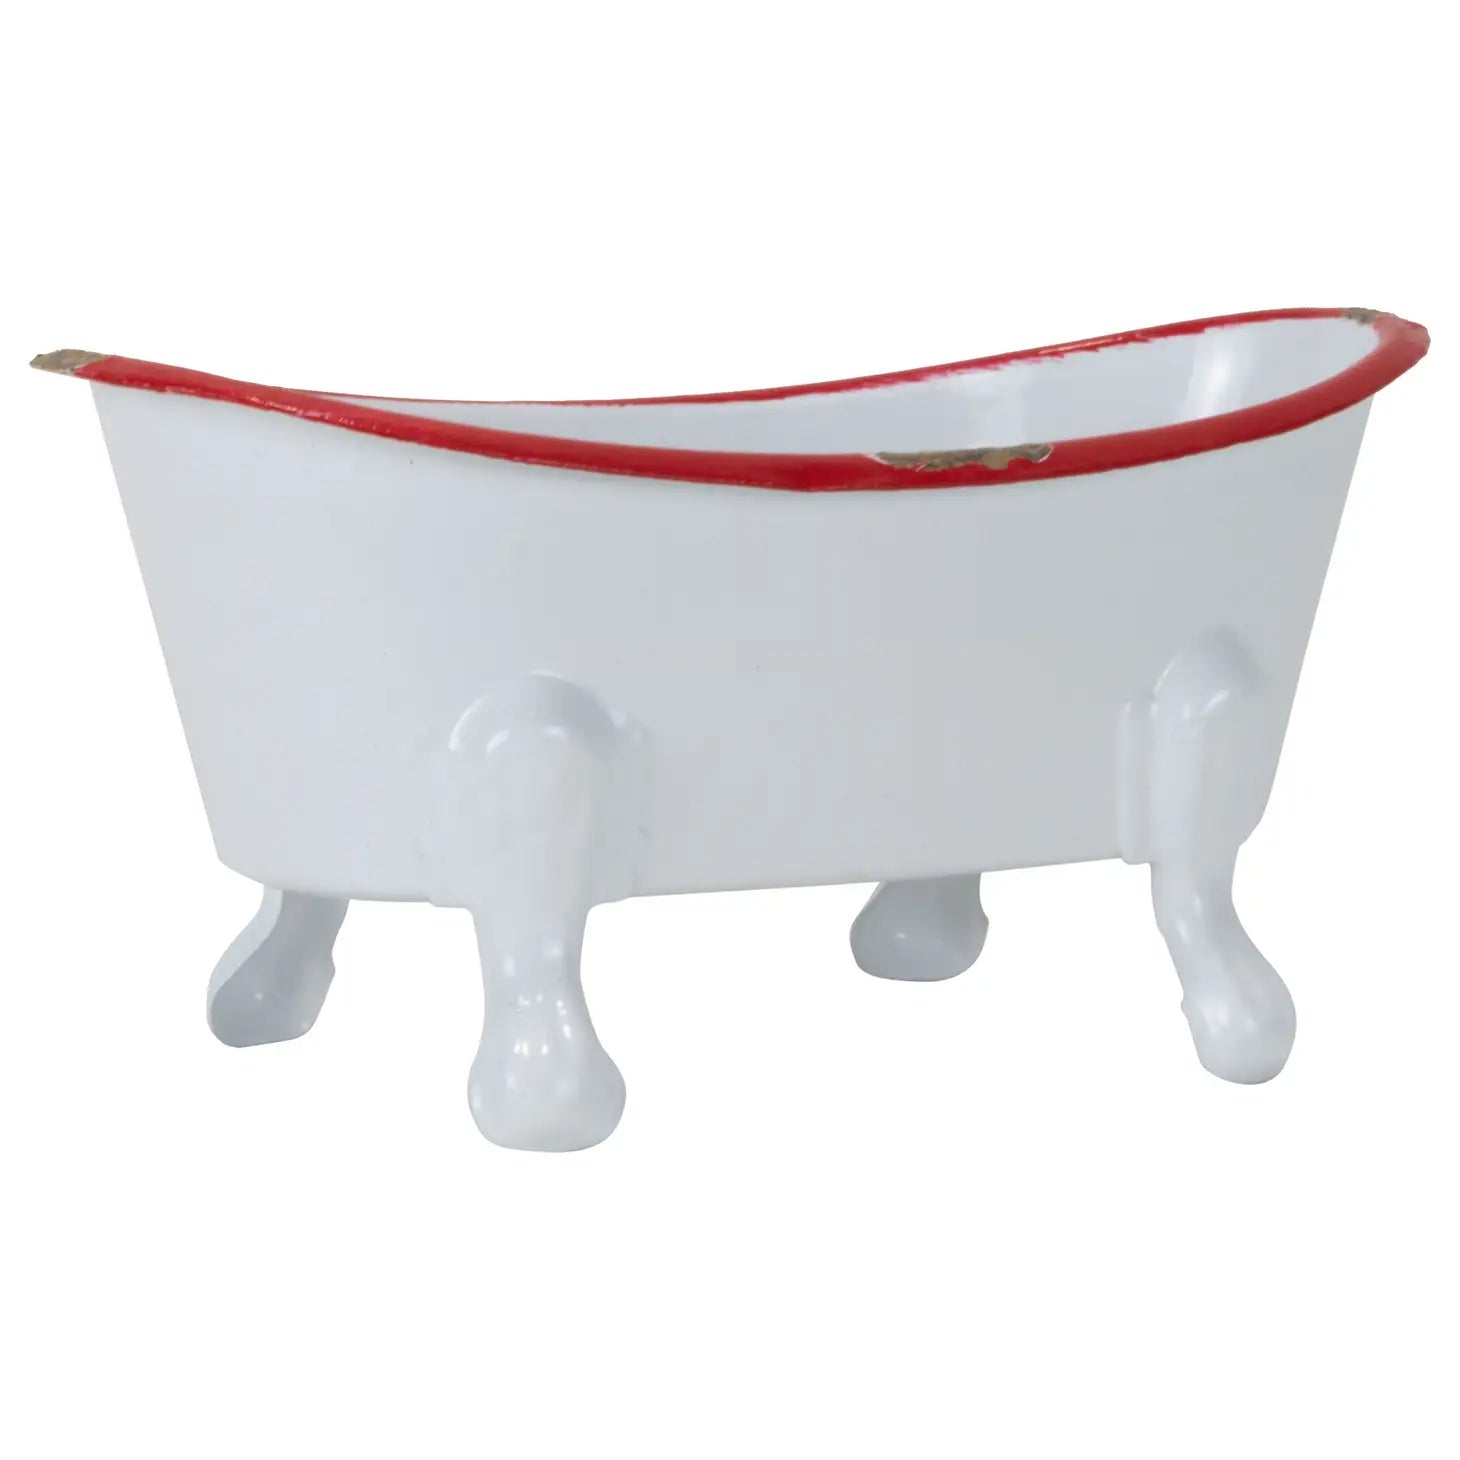 Clawfoot Tub Cast Iron Soap Dish - Bathroom Accessories - Soap Holders